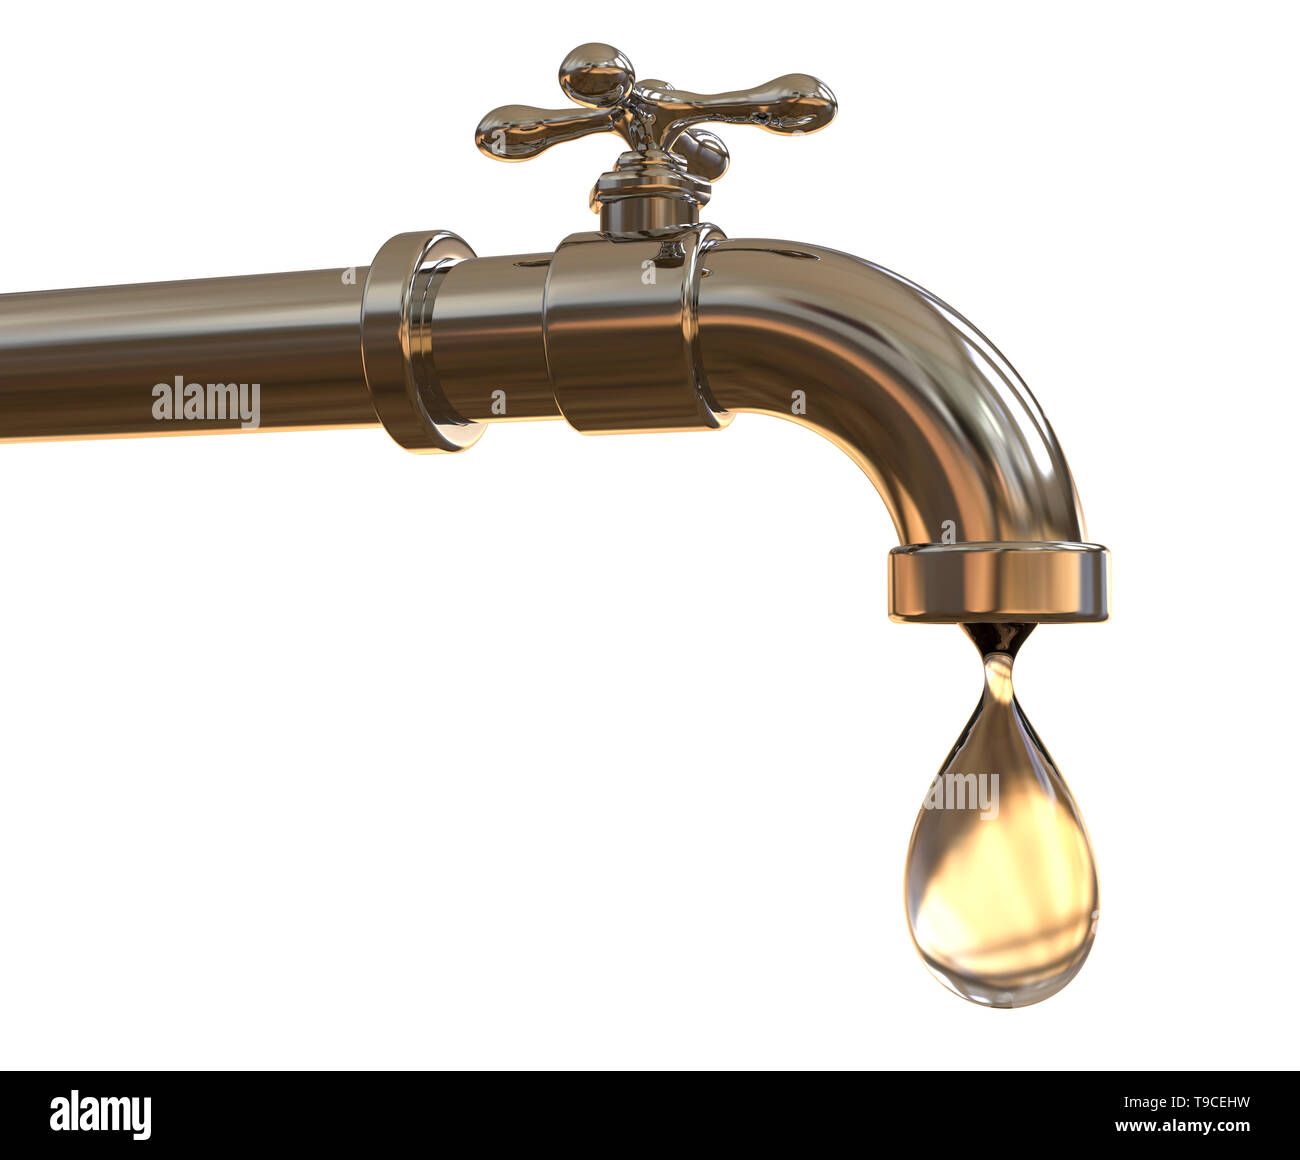 Tap water, illustration Stock Photo